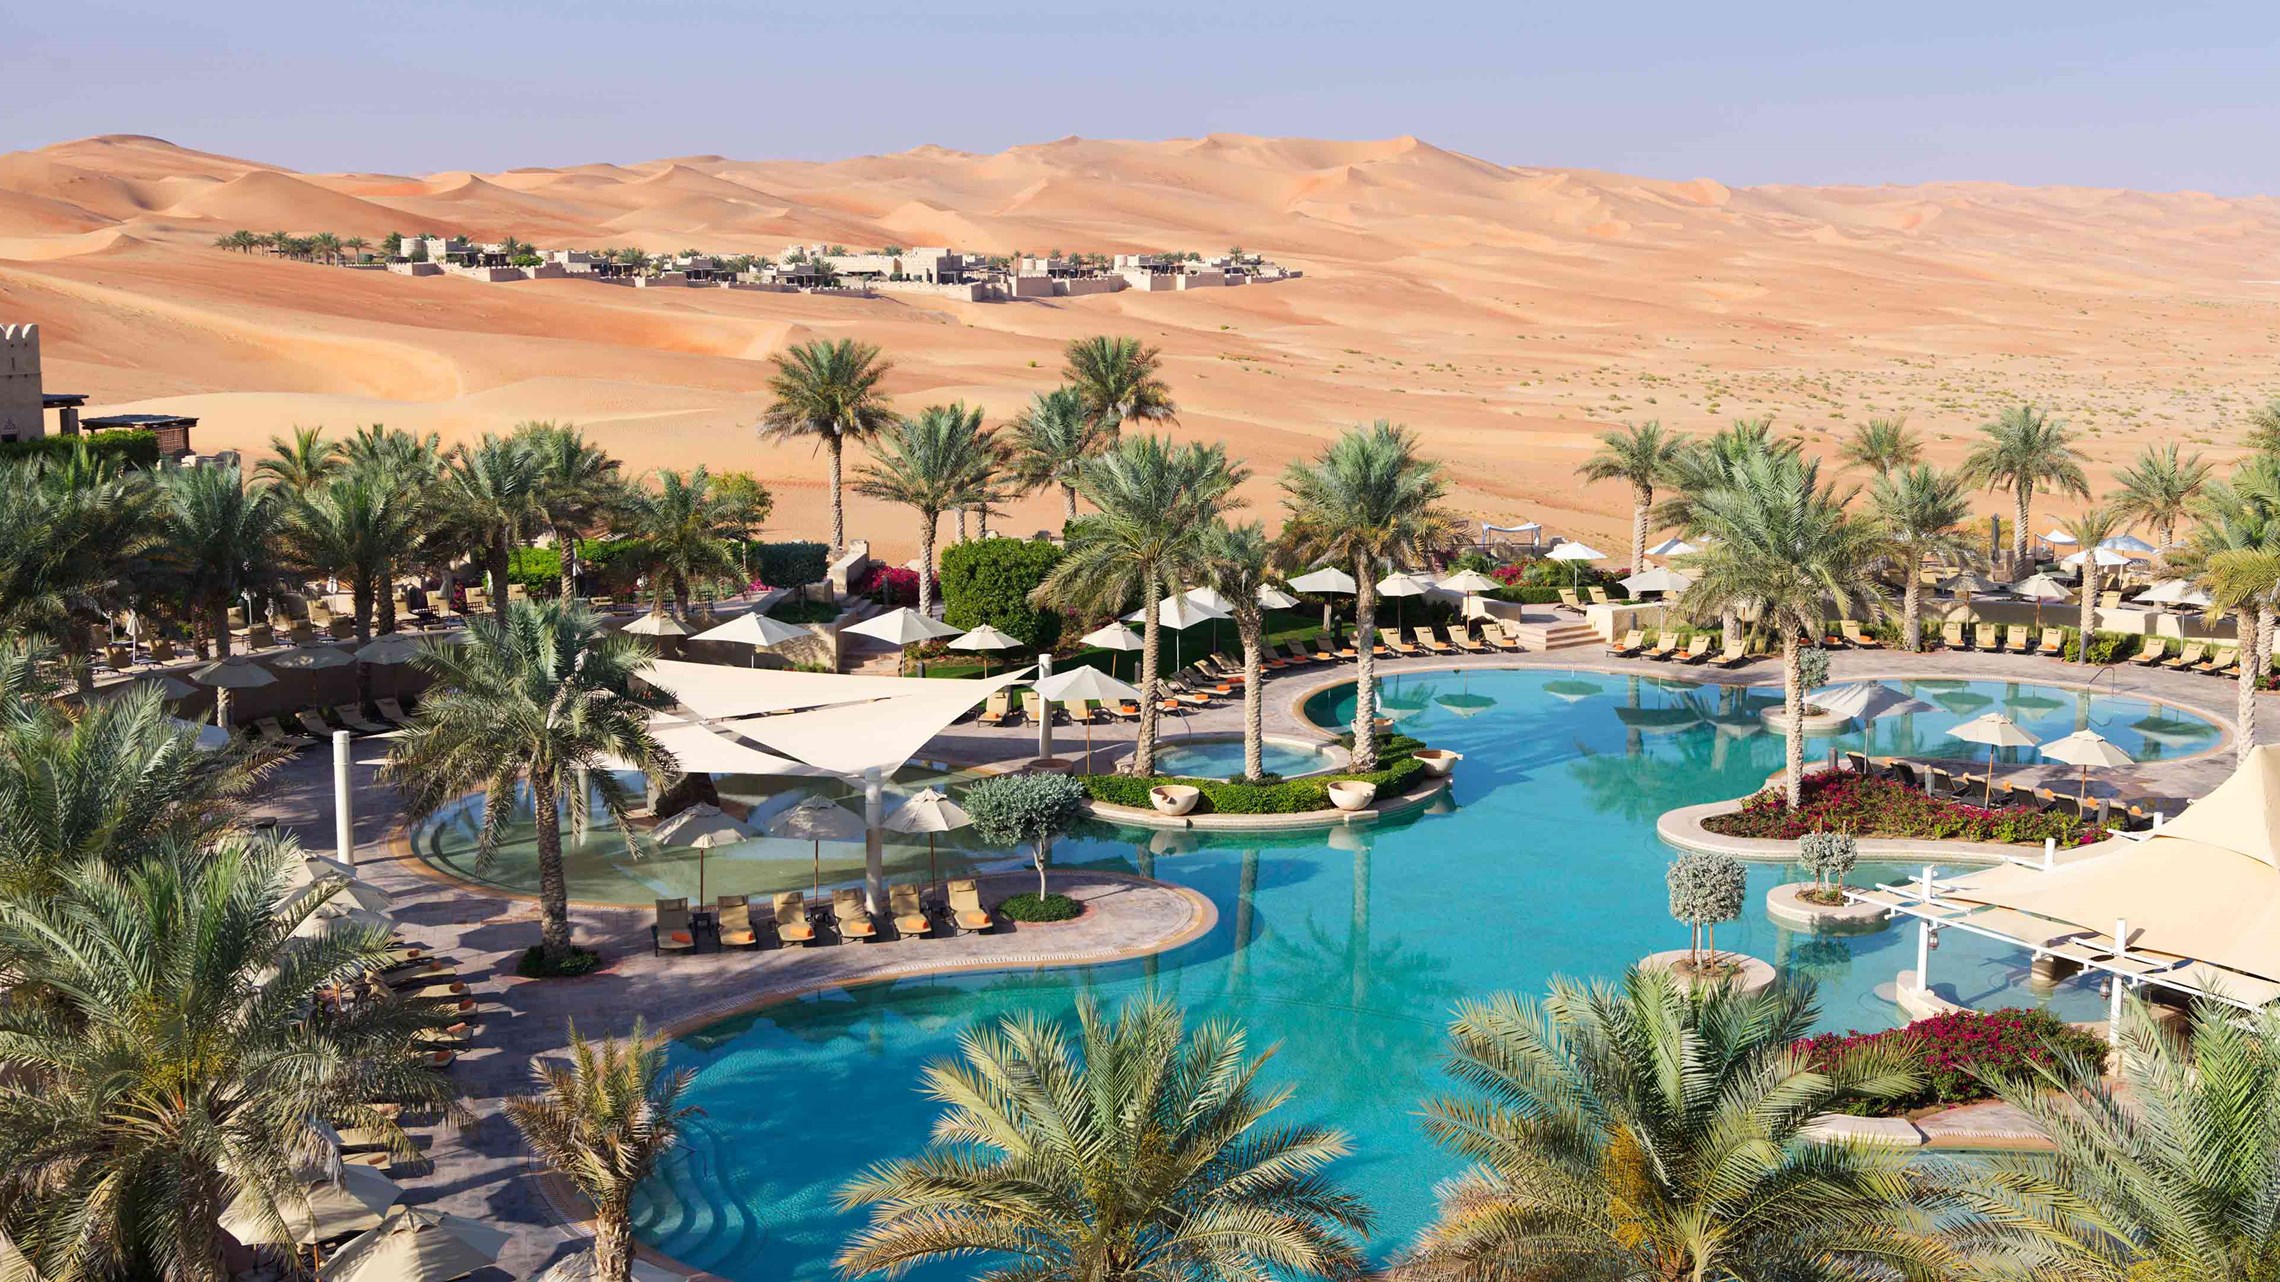 The swimming pool at Qasr Al Sarab Desert Resort by Anantara